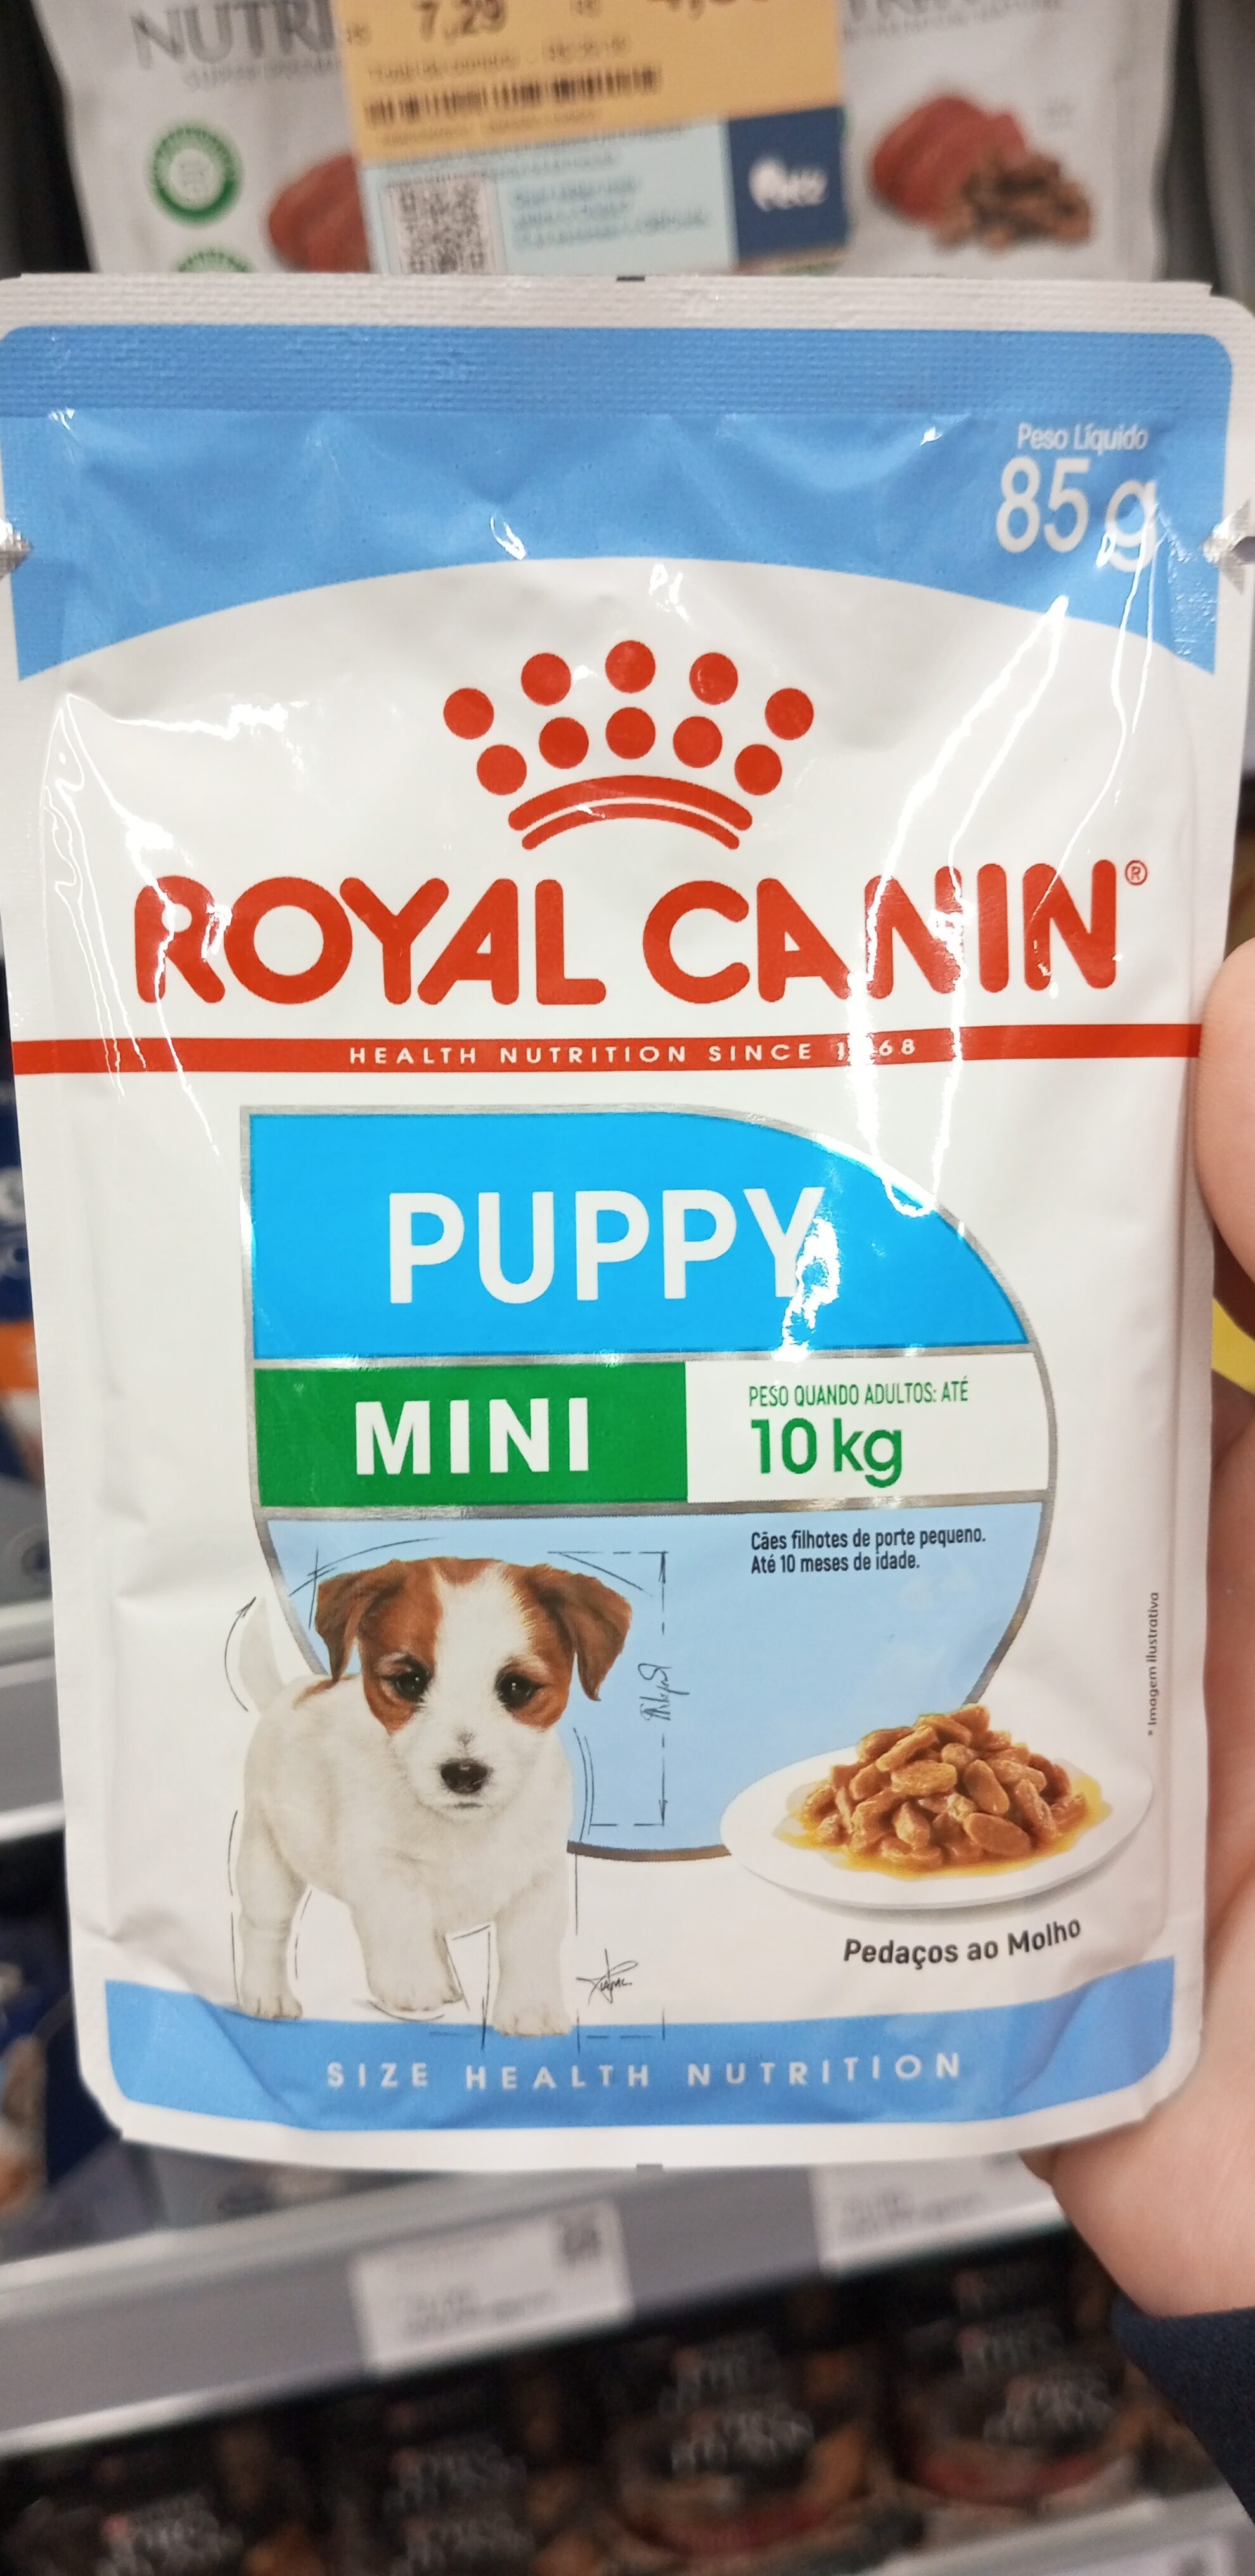 Alimento cães sachê Royal Canin 85g mini puppy - Product - pt